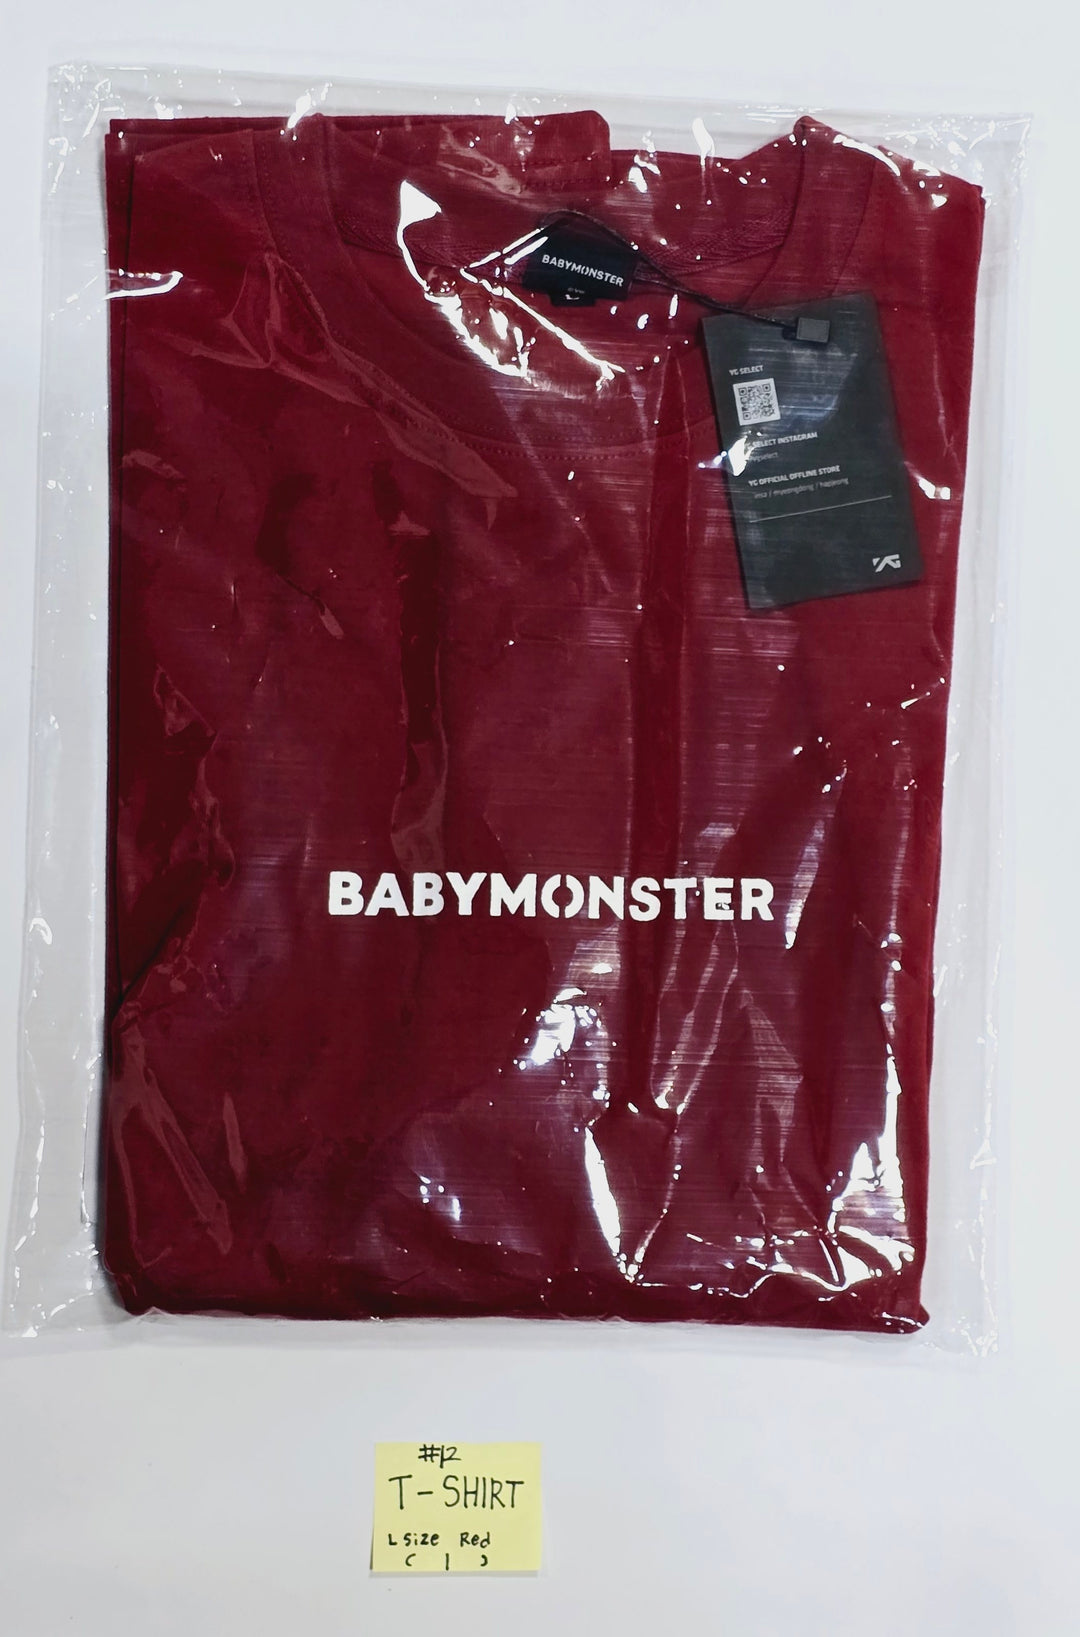 BABYMONSTER - 「BABYMONS7ER」ポップアップストアMD（フォトカードホルダー、ホーンボールキャップ、Tシャツ、パーカー） [24.4.1]